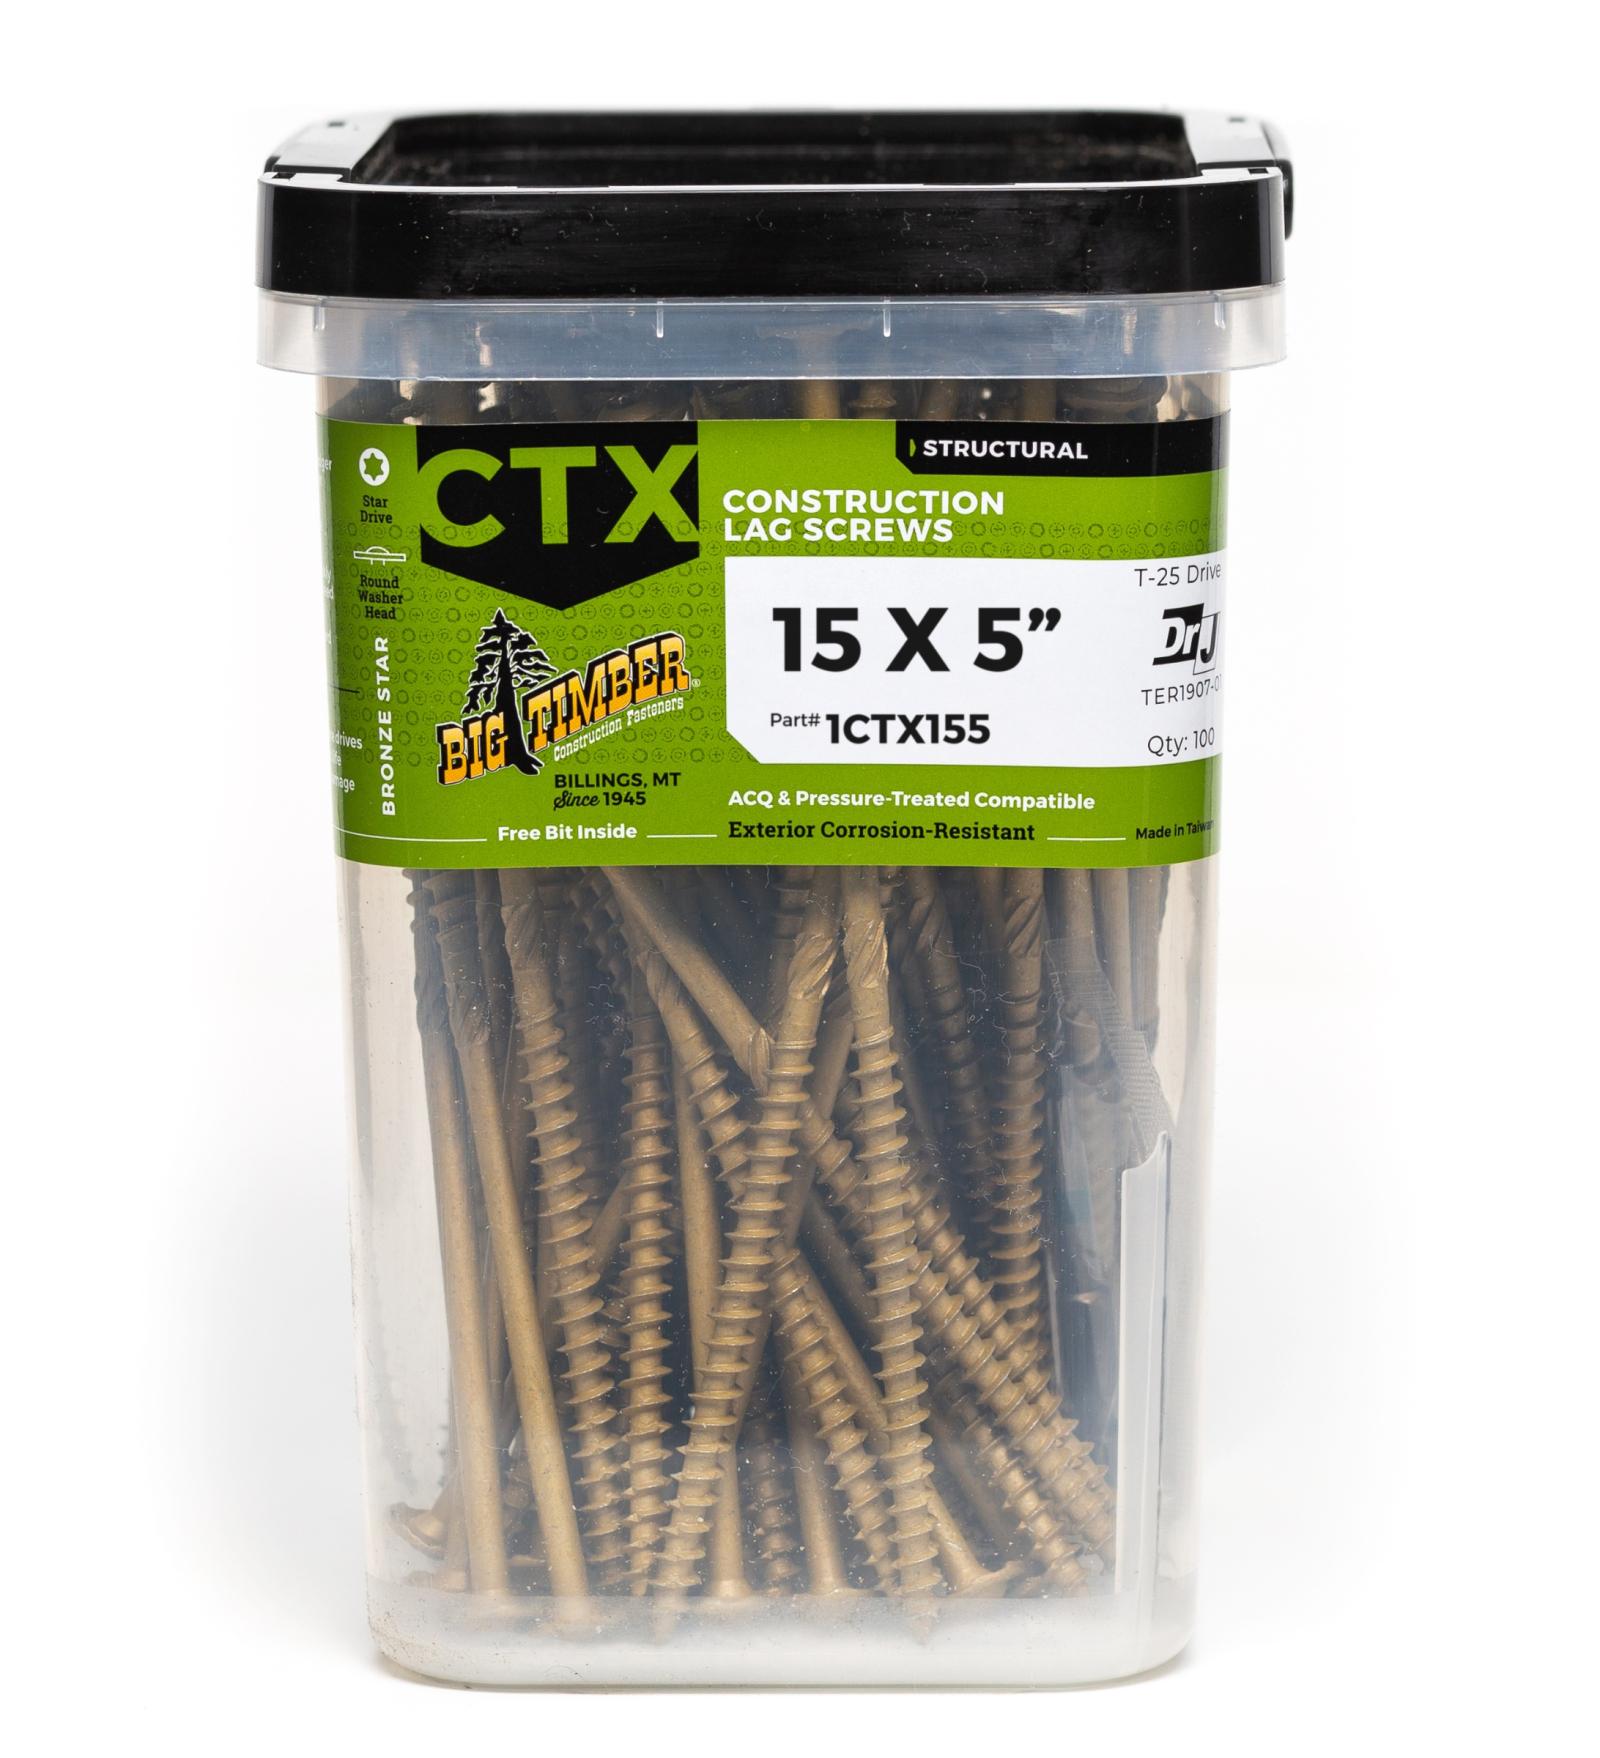 Big Timber Fasteners #15 CTX Structural Lag Screws